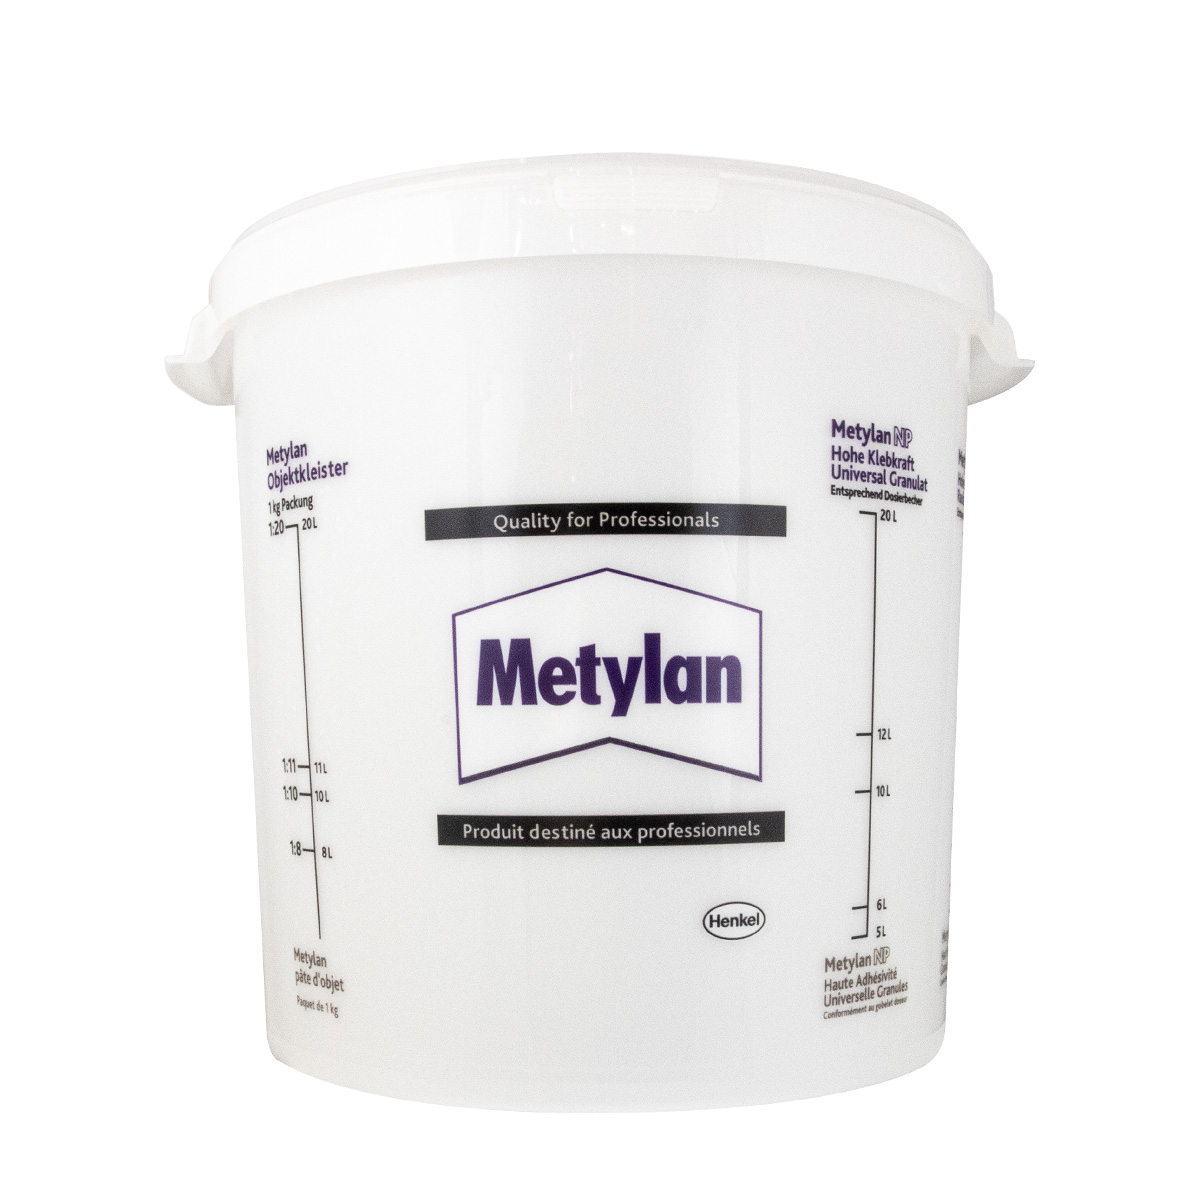 Metylan online Produkte bestellen | Farbklecks24